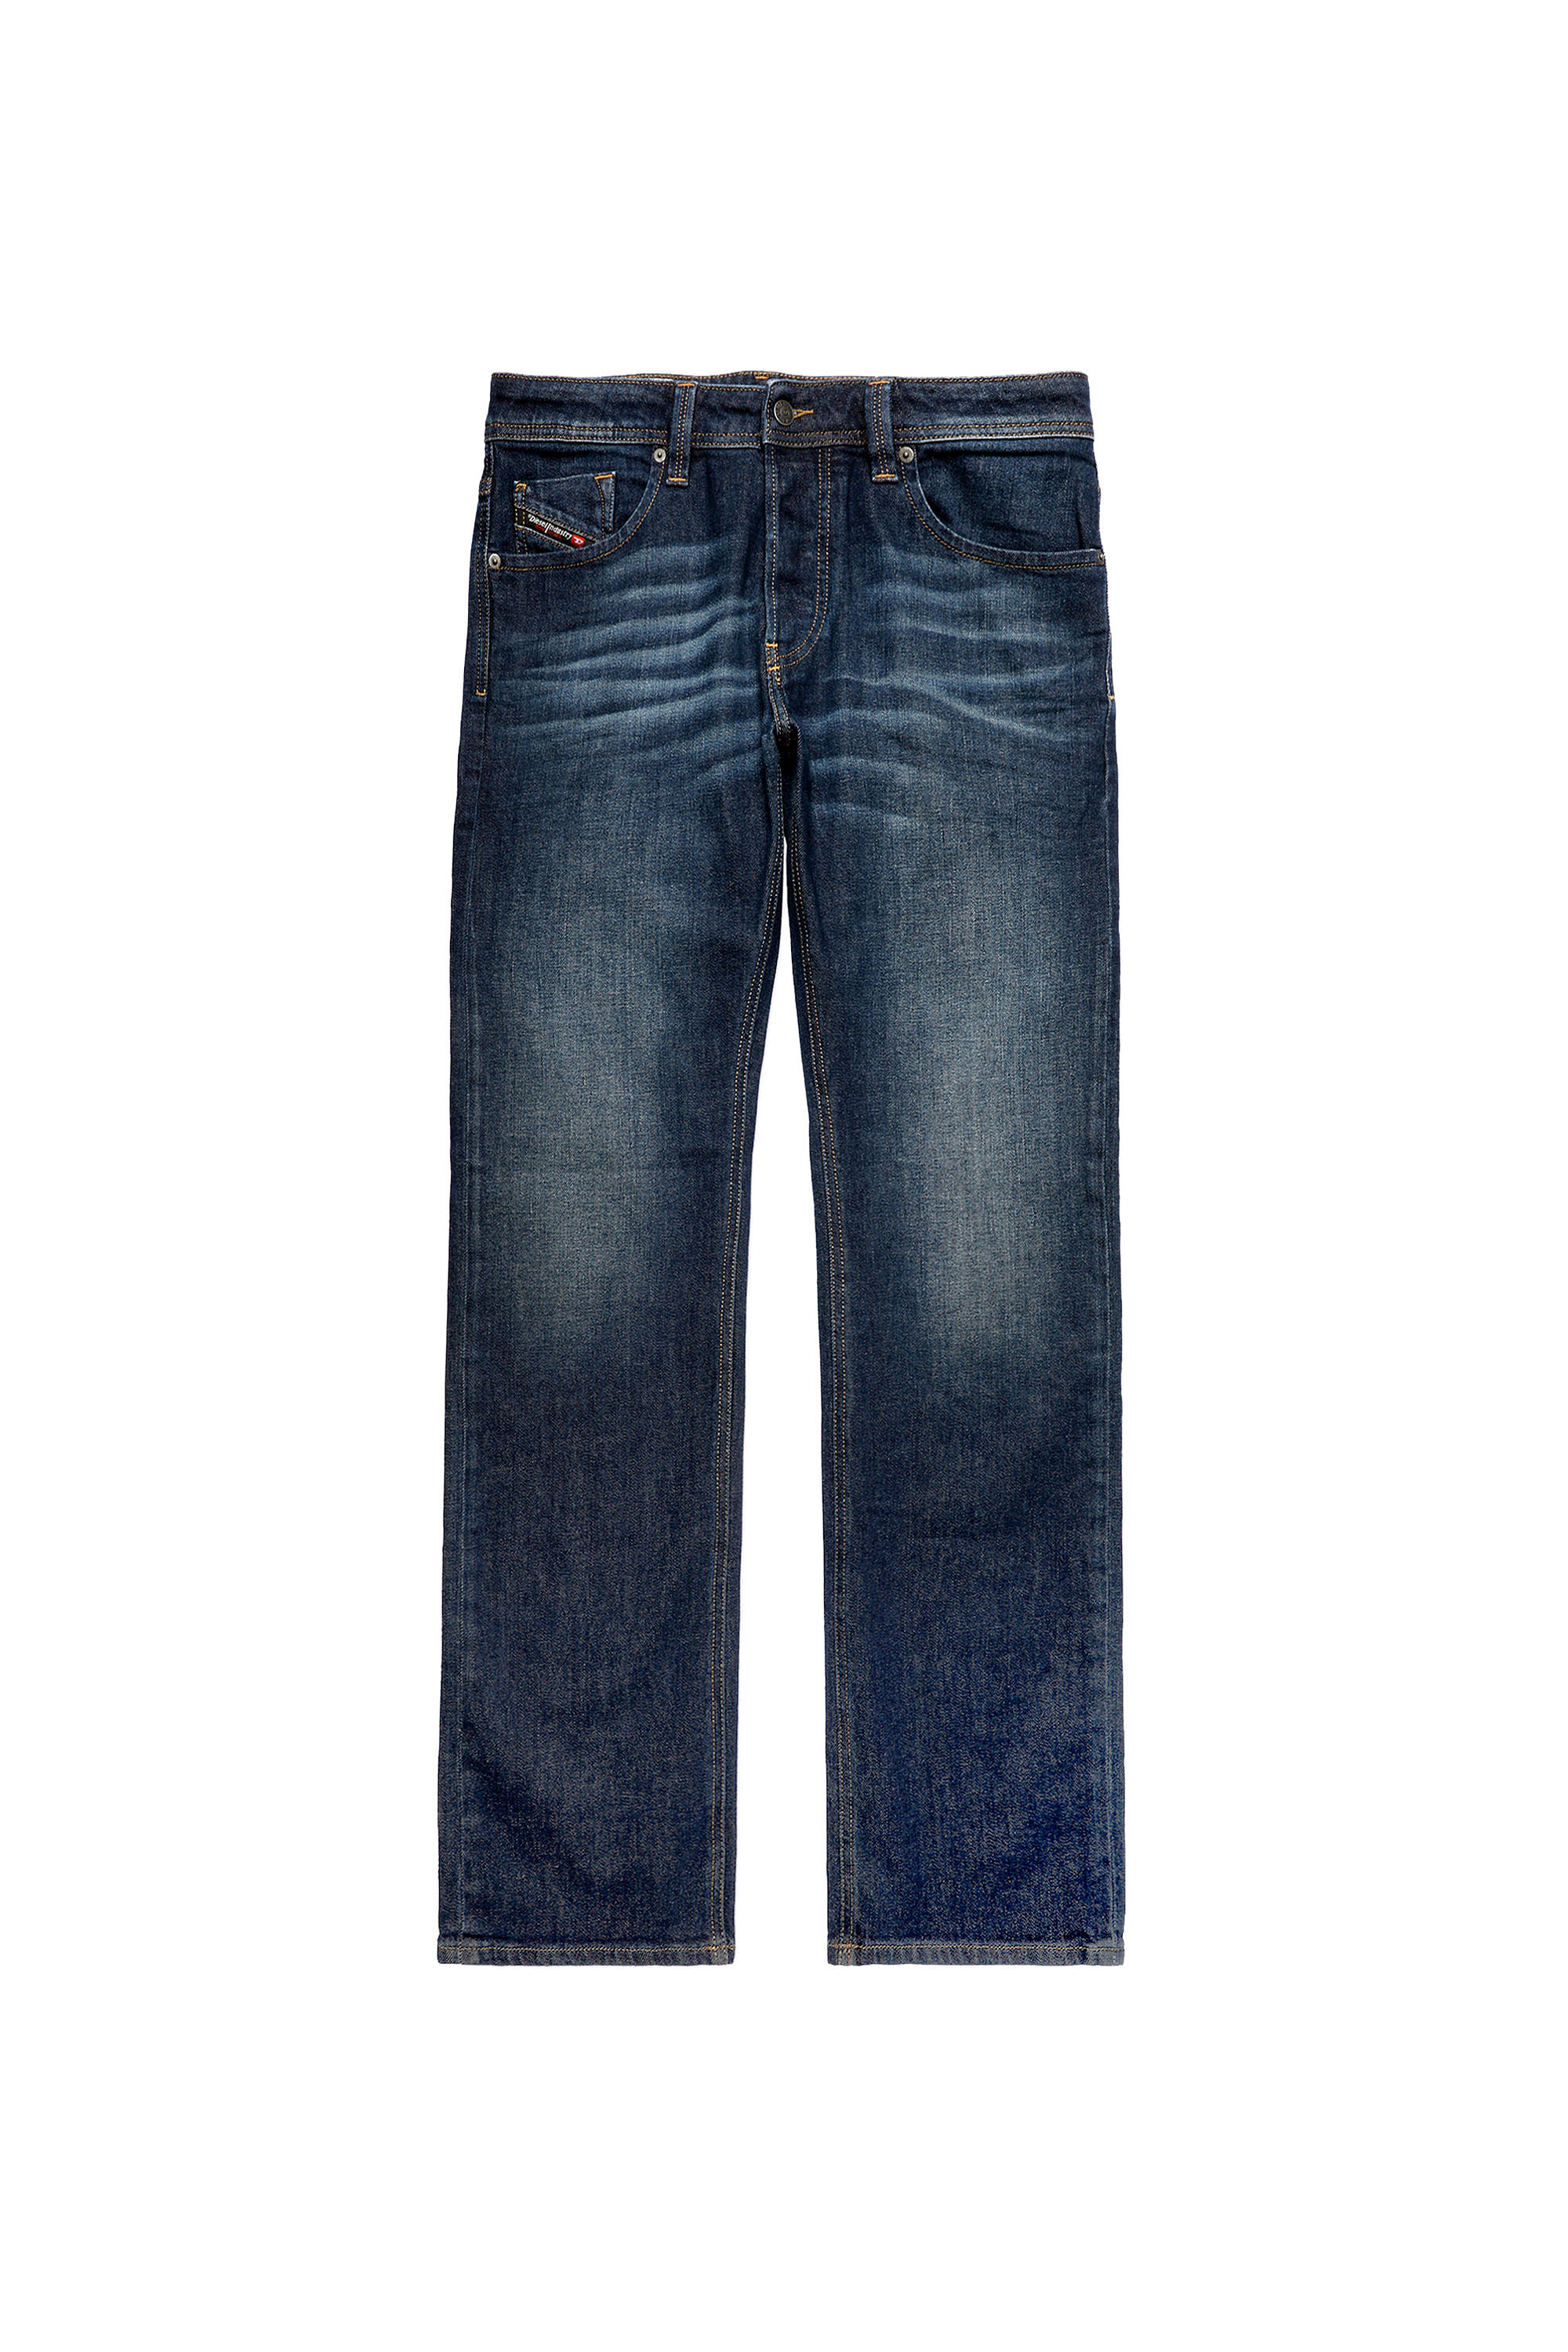 Diesel - Larkee Straight Jeans 009HN,  - Image 7